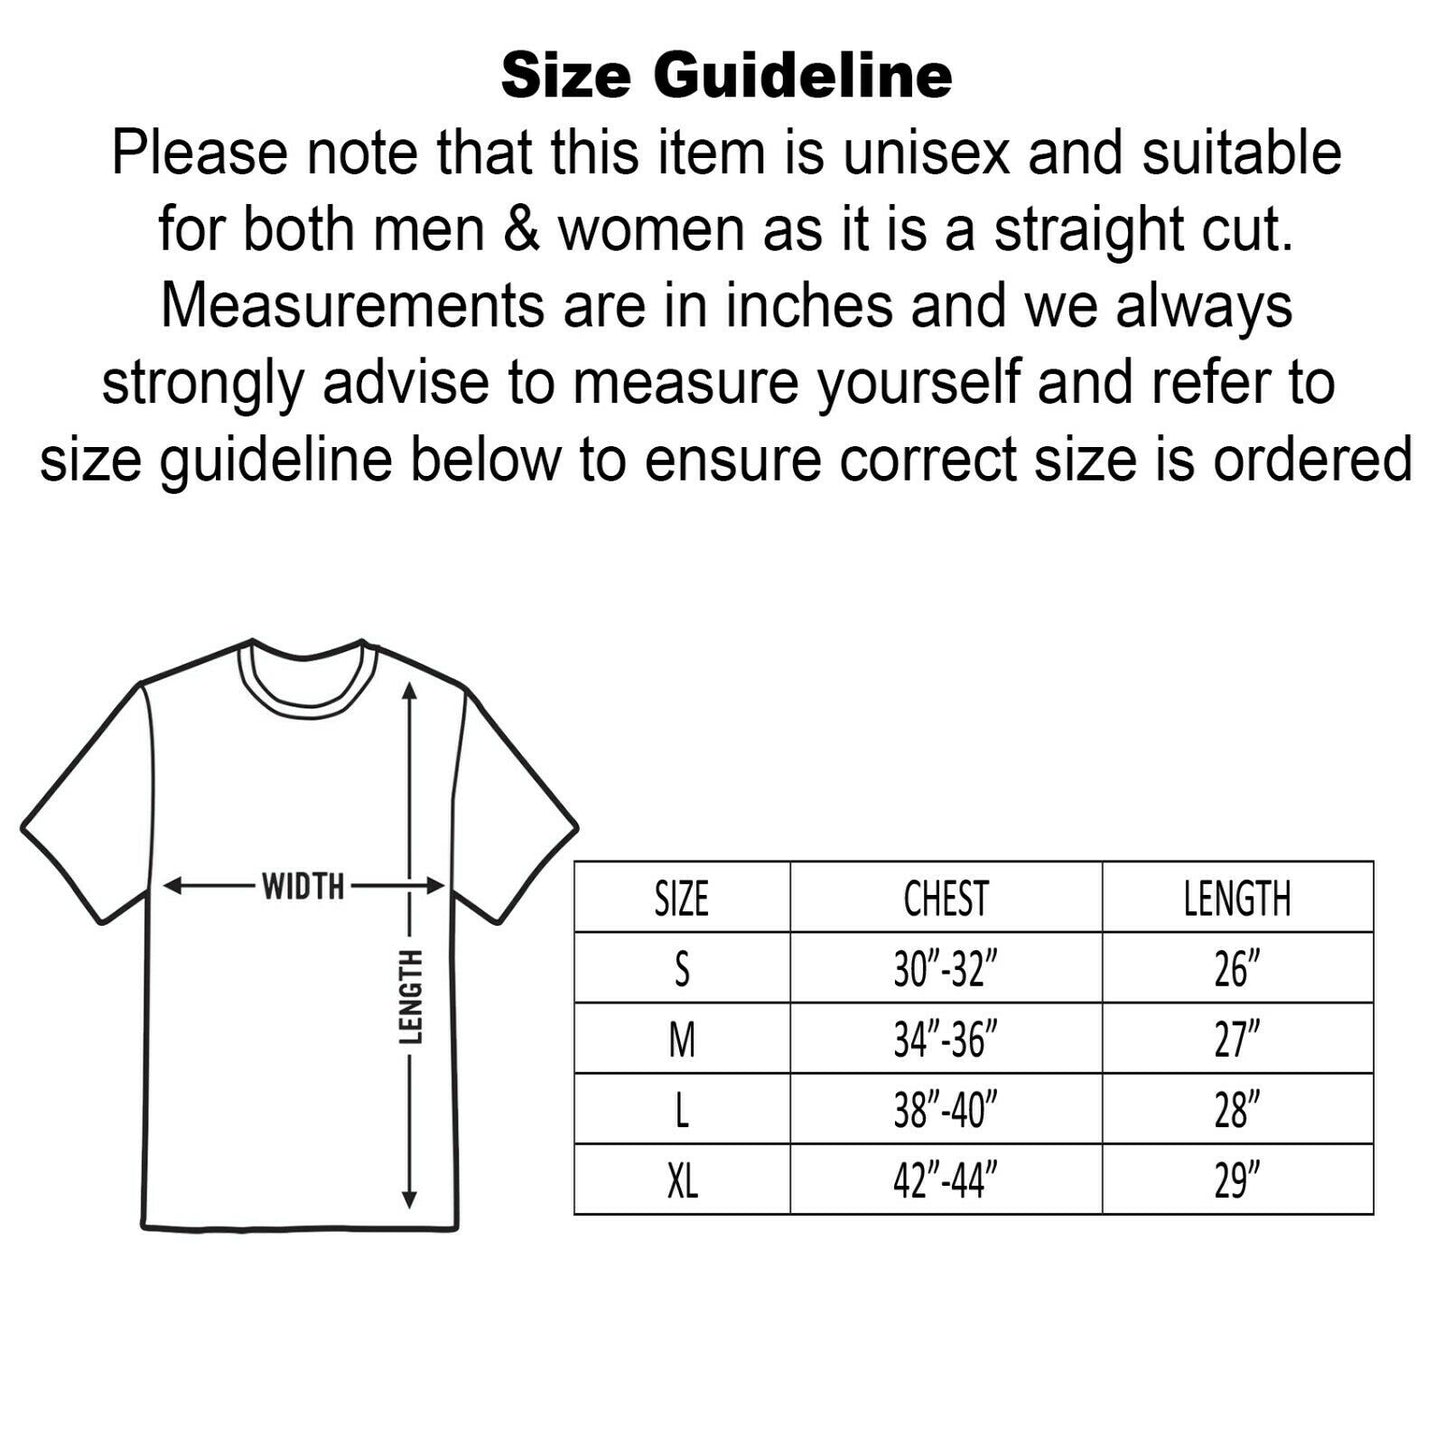 Unisex Tupac 2pac 3/4 Sleeve Baseball T-Shirt